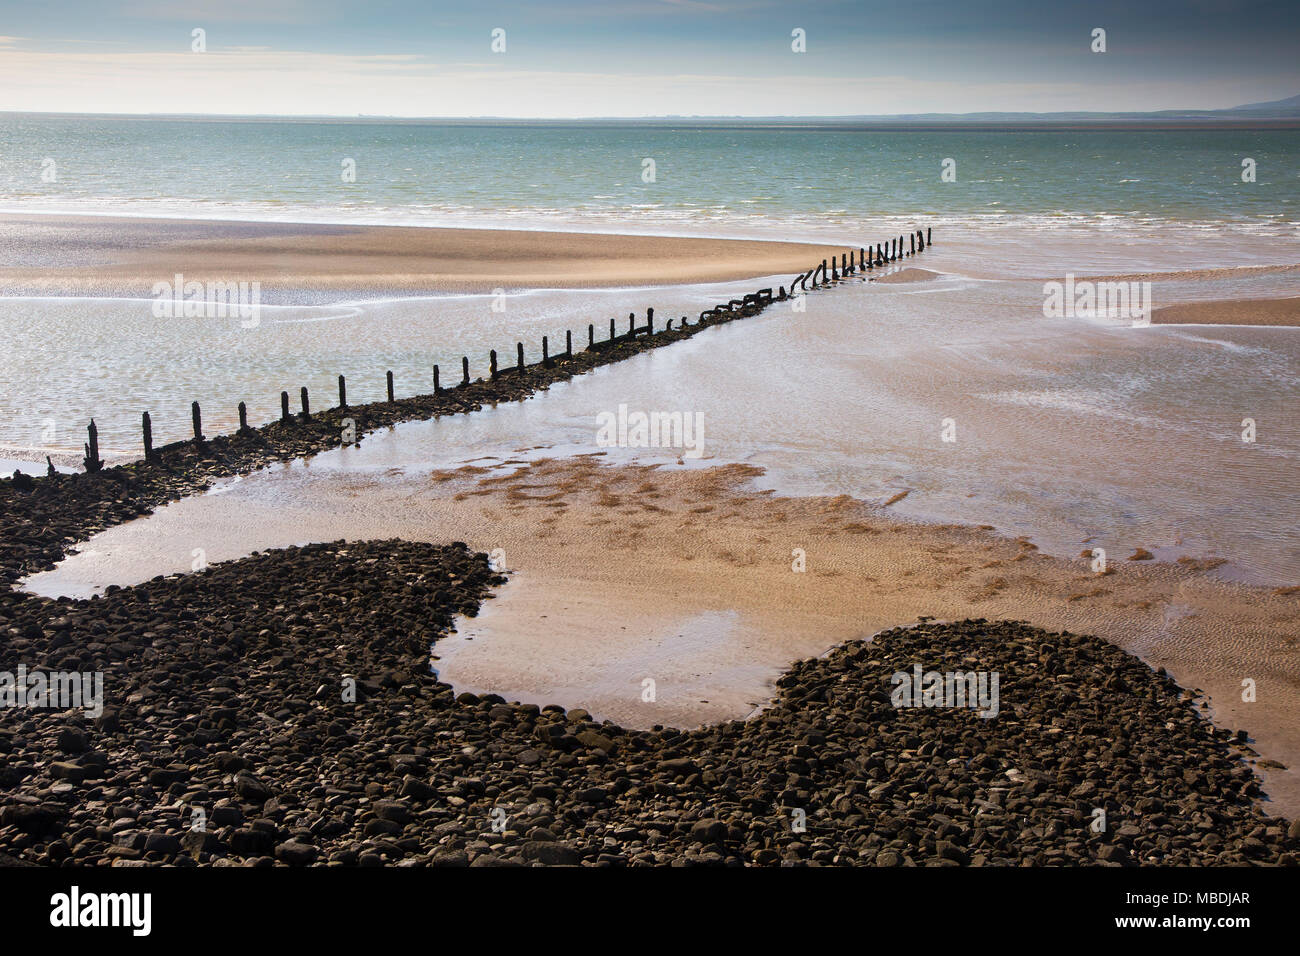 Remote ocean beach with craggy jetty, Heysham, Lancs, UK Stock Photo